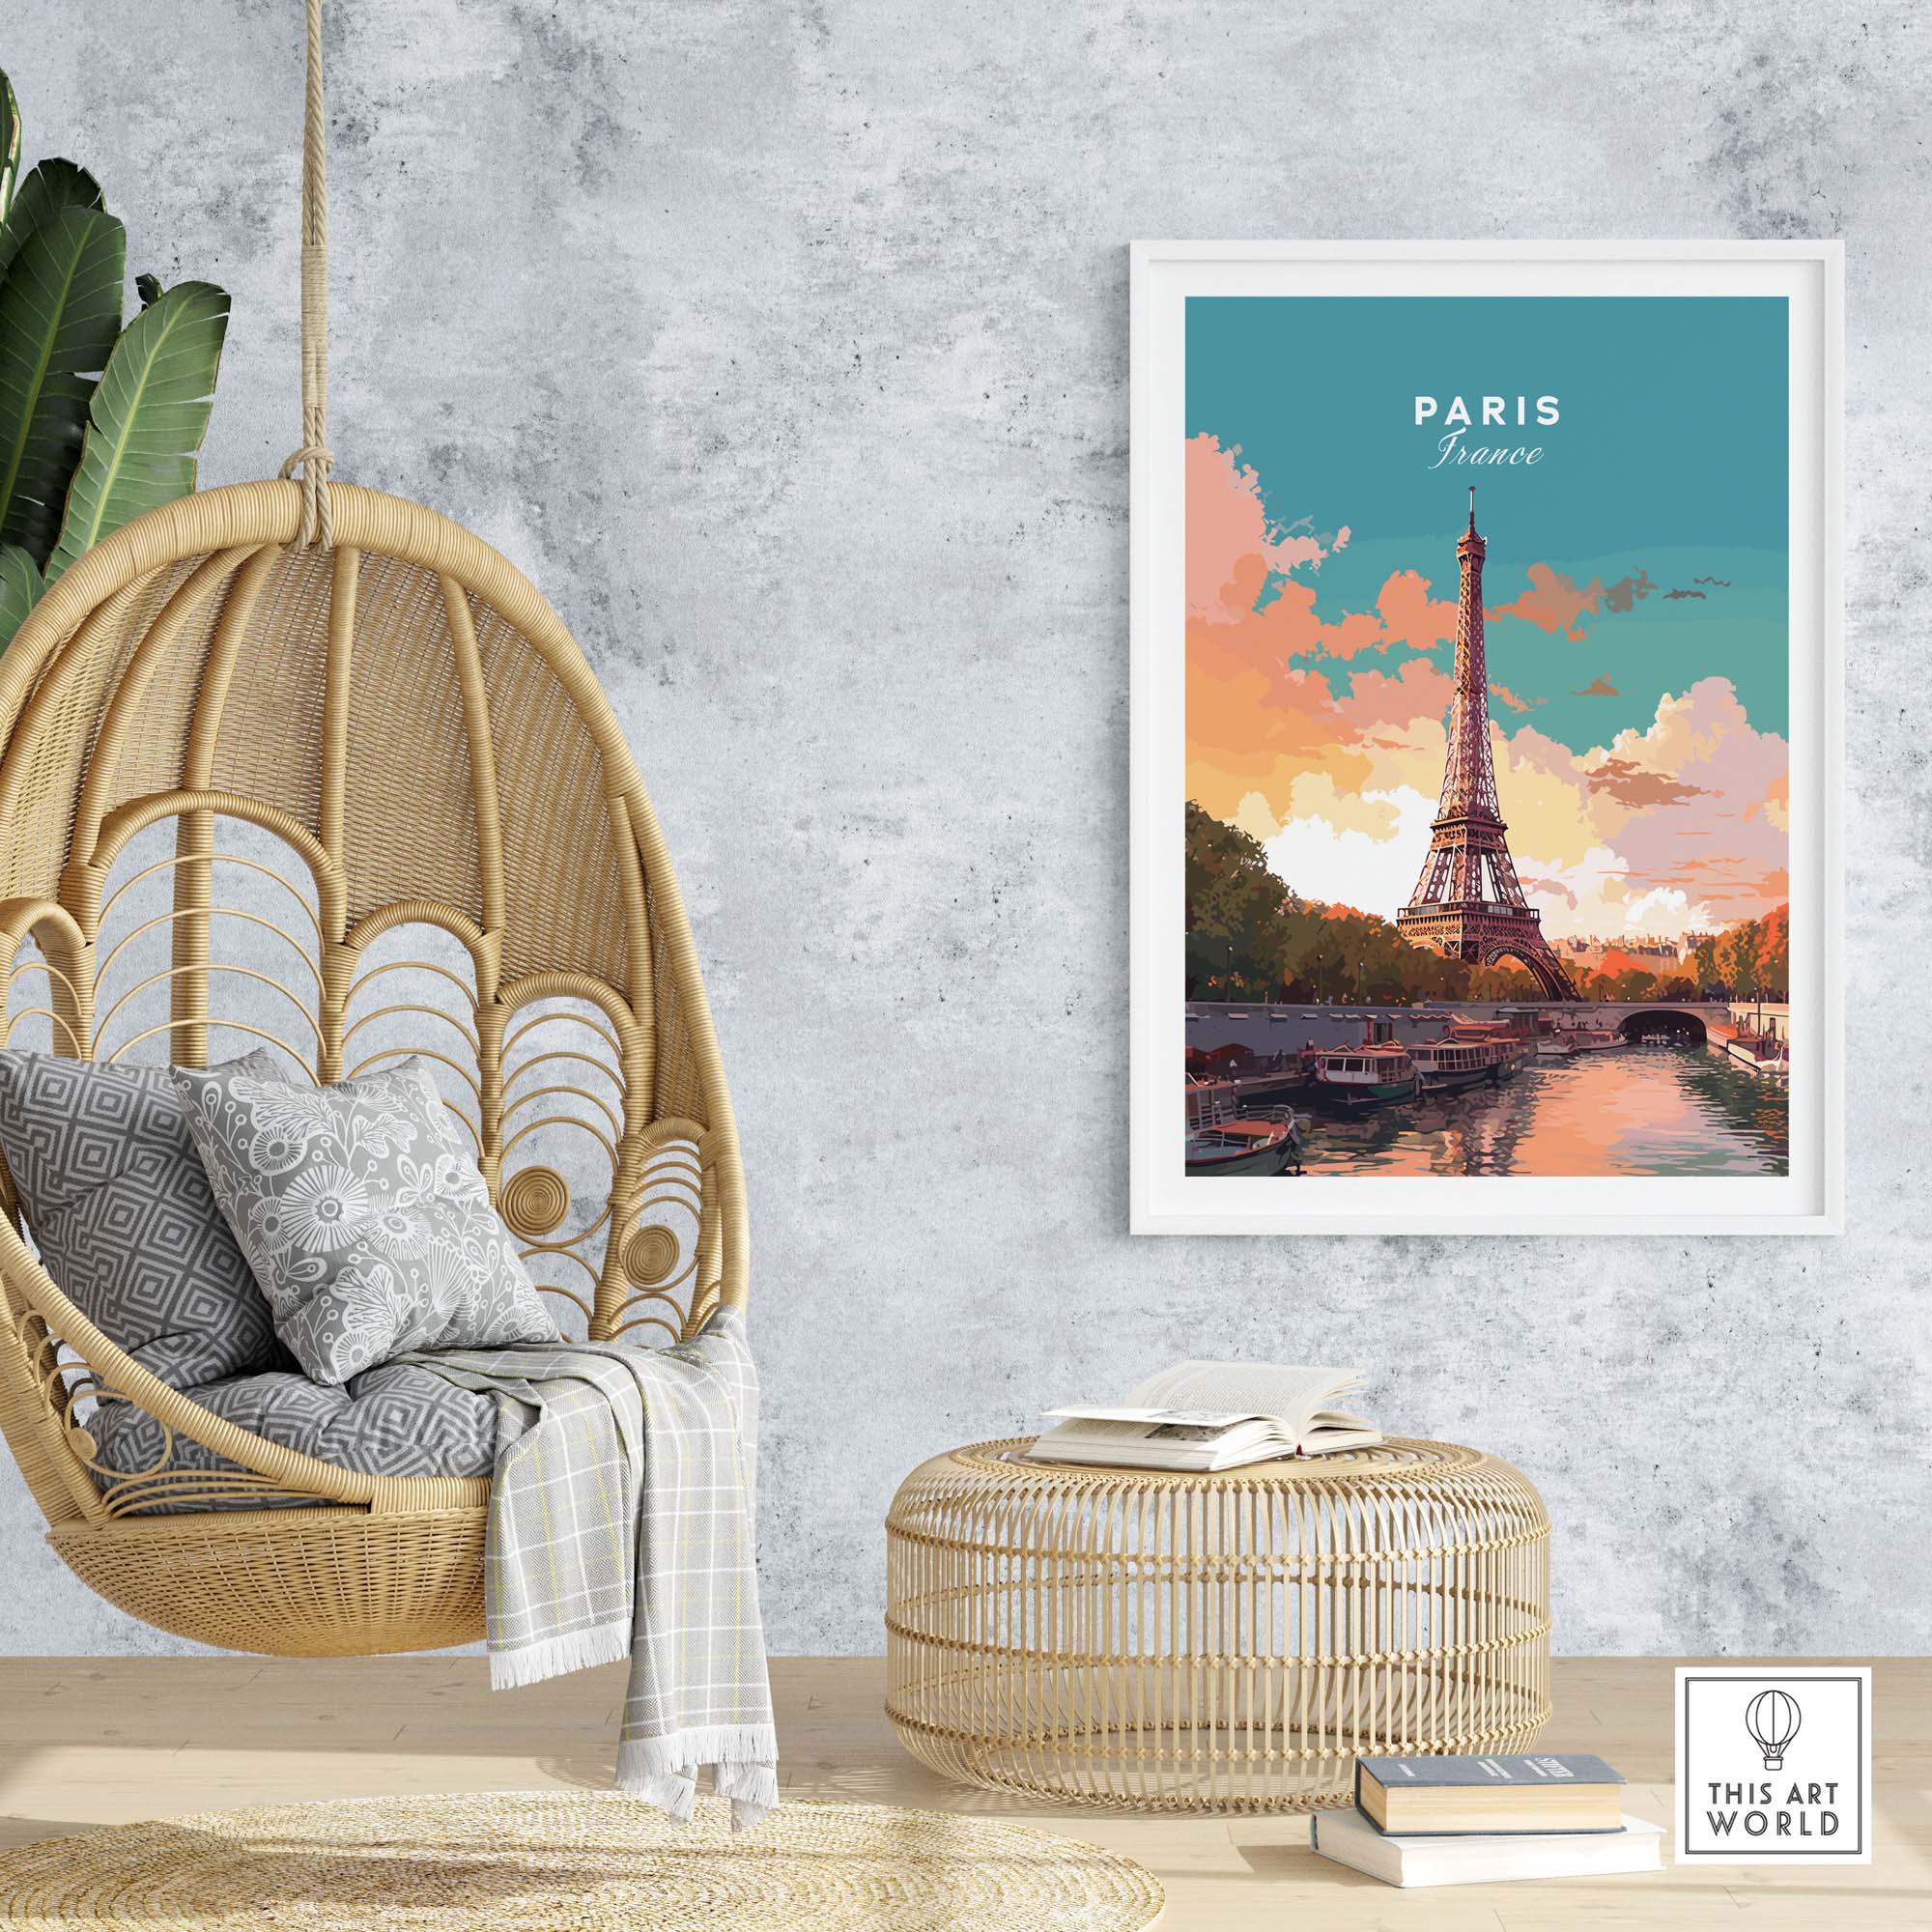 Paris Poster - Eiffel Tower